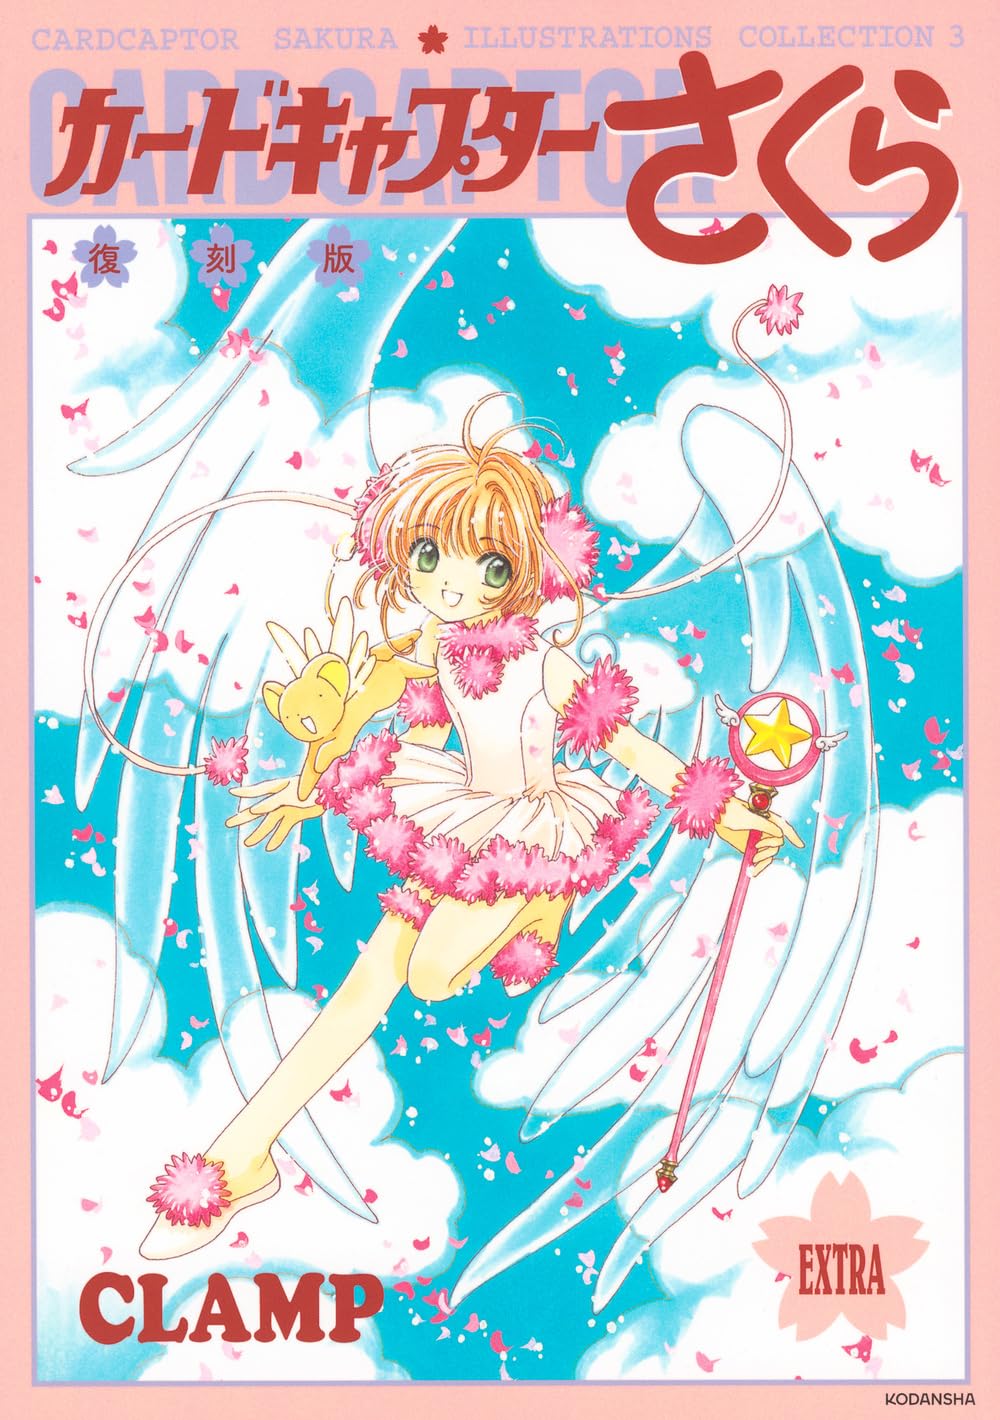 Cardcaptor Sakura Illustrations Collection Vol.3 Reprint edition